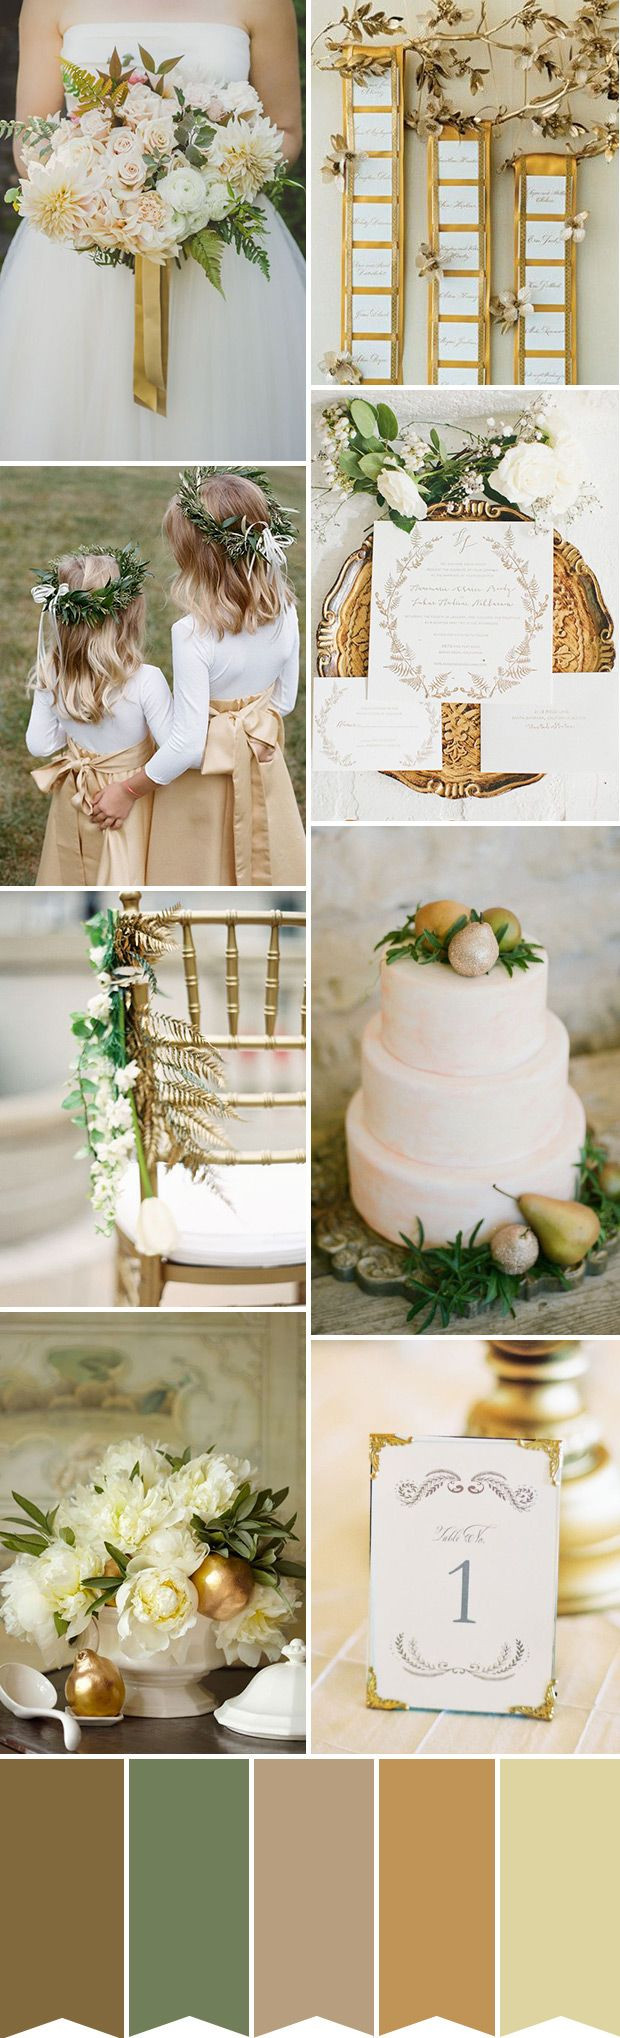 Rustic Wedding Colors
 Popular Rustic Wedding Themes 2015 – BLOG